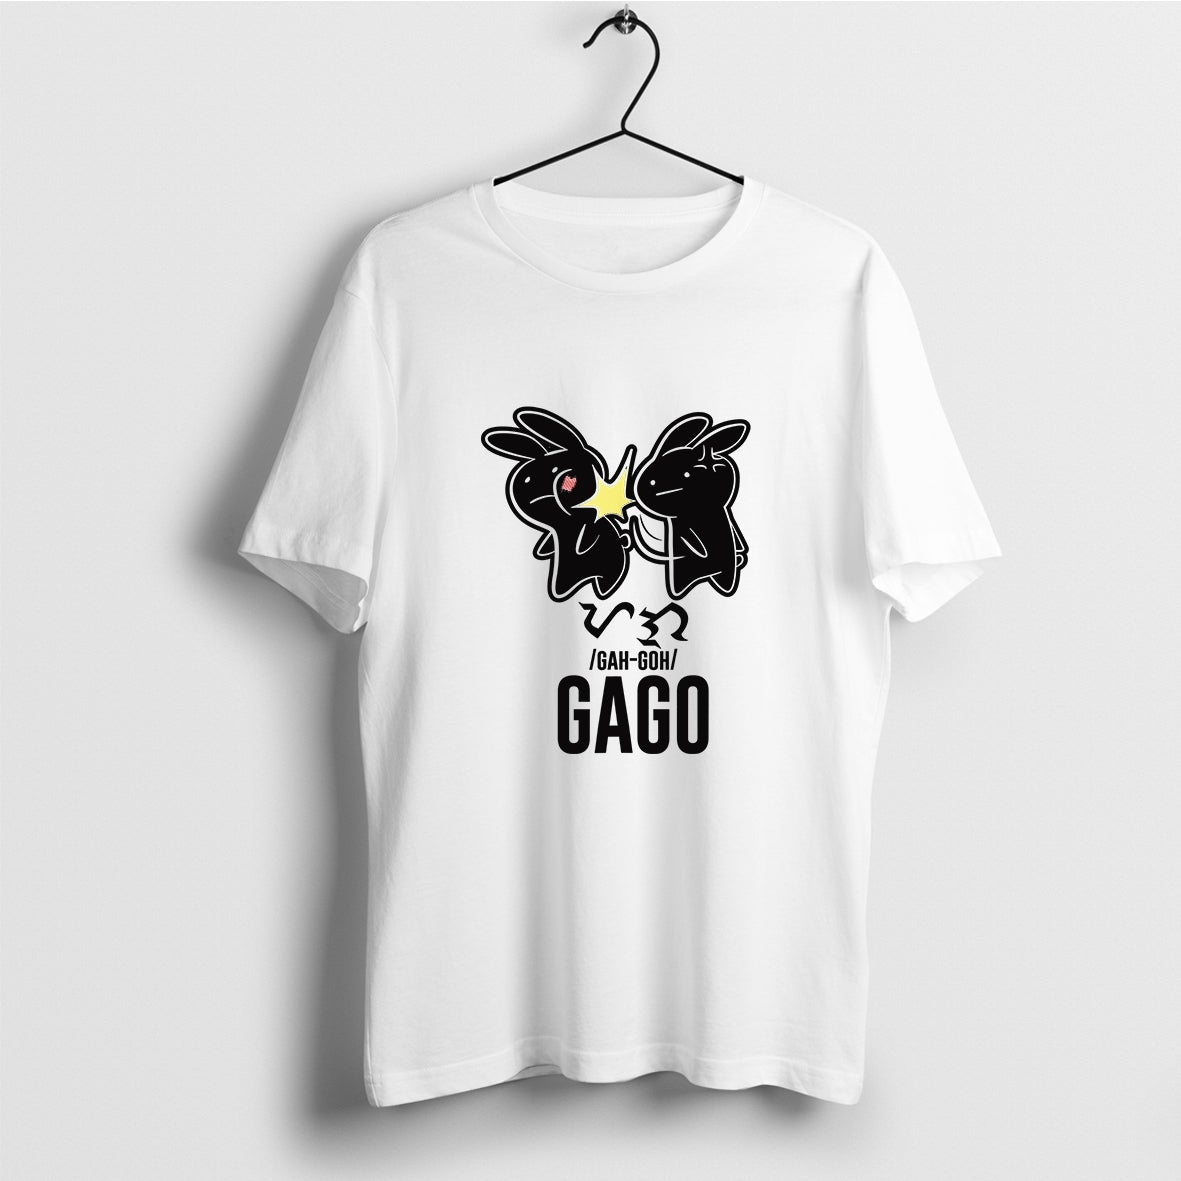 Gago Gaga Filipino T-Shirt, Rabbit Couple Shirt, Filipino Shirt, Cute Rabbit Tee, Funny Filipino Gift